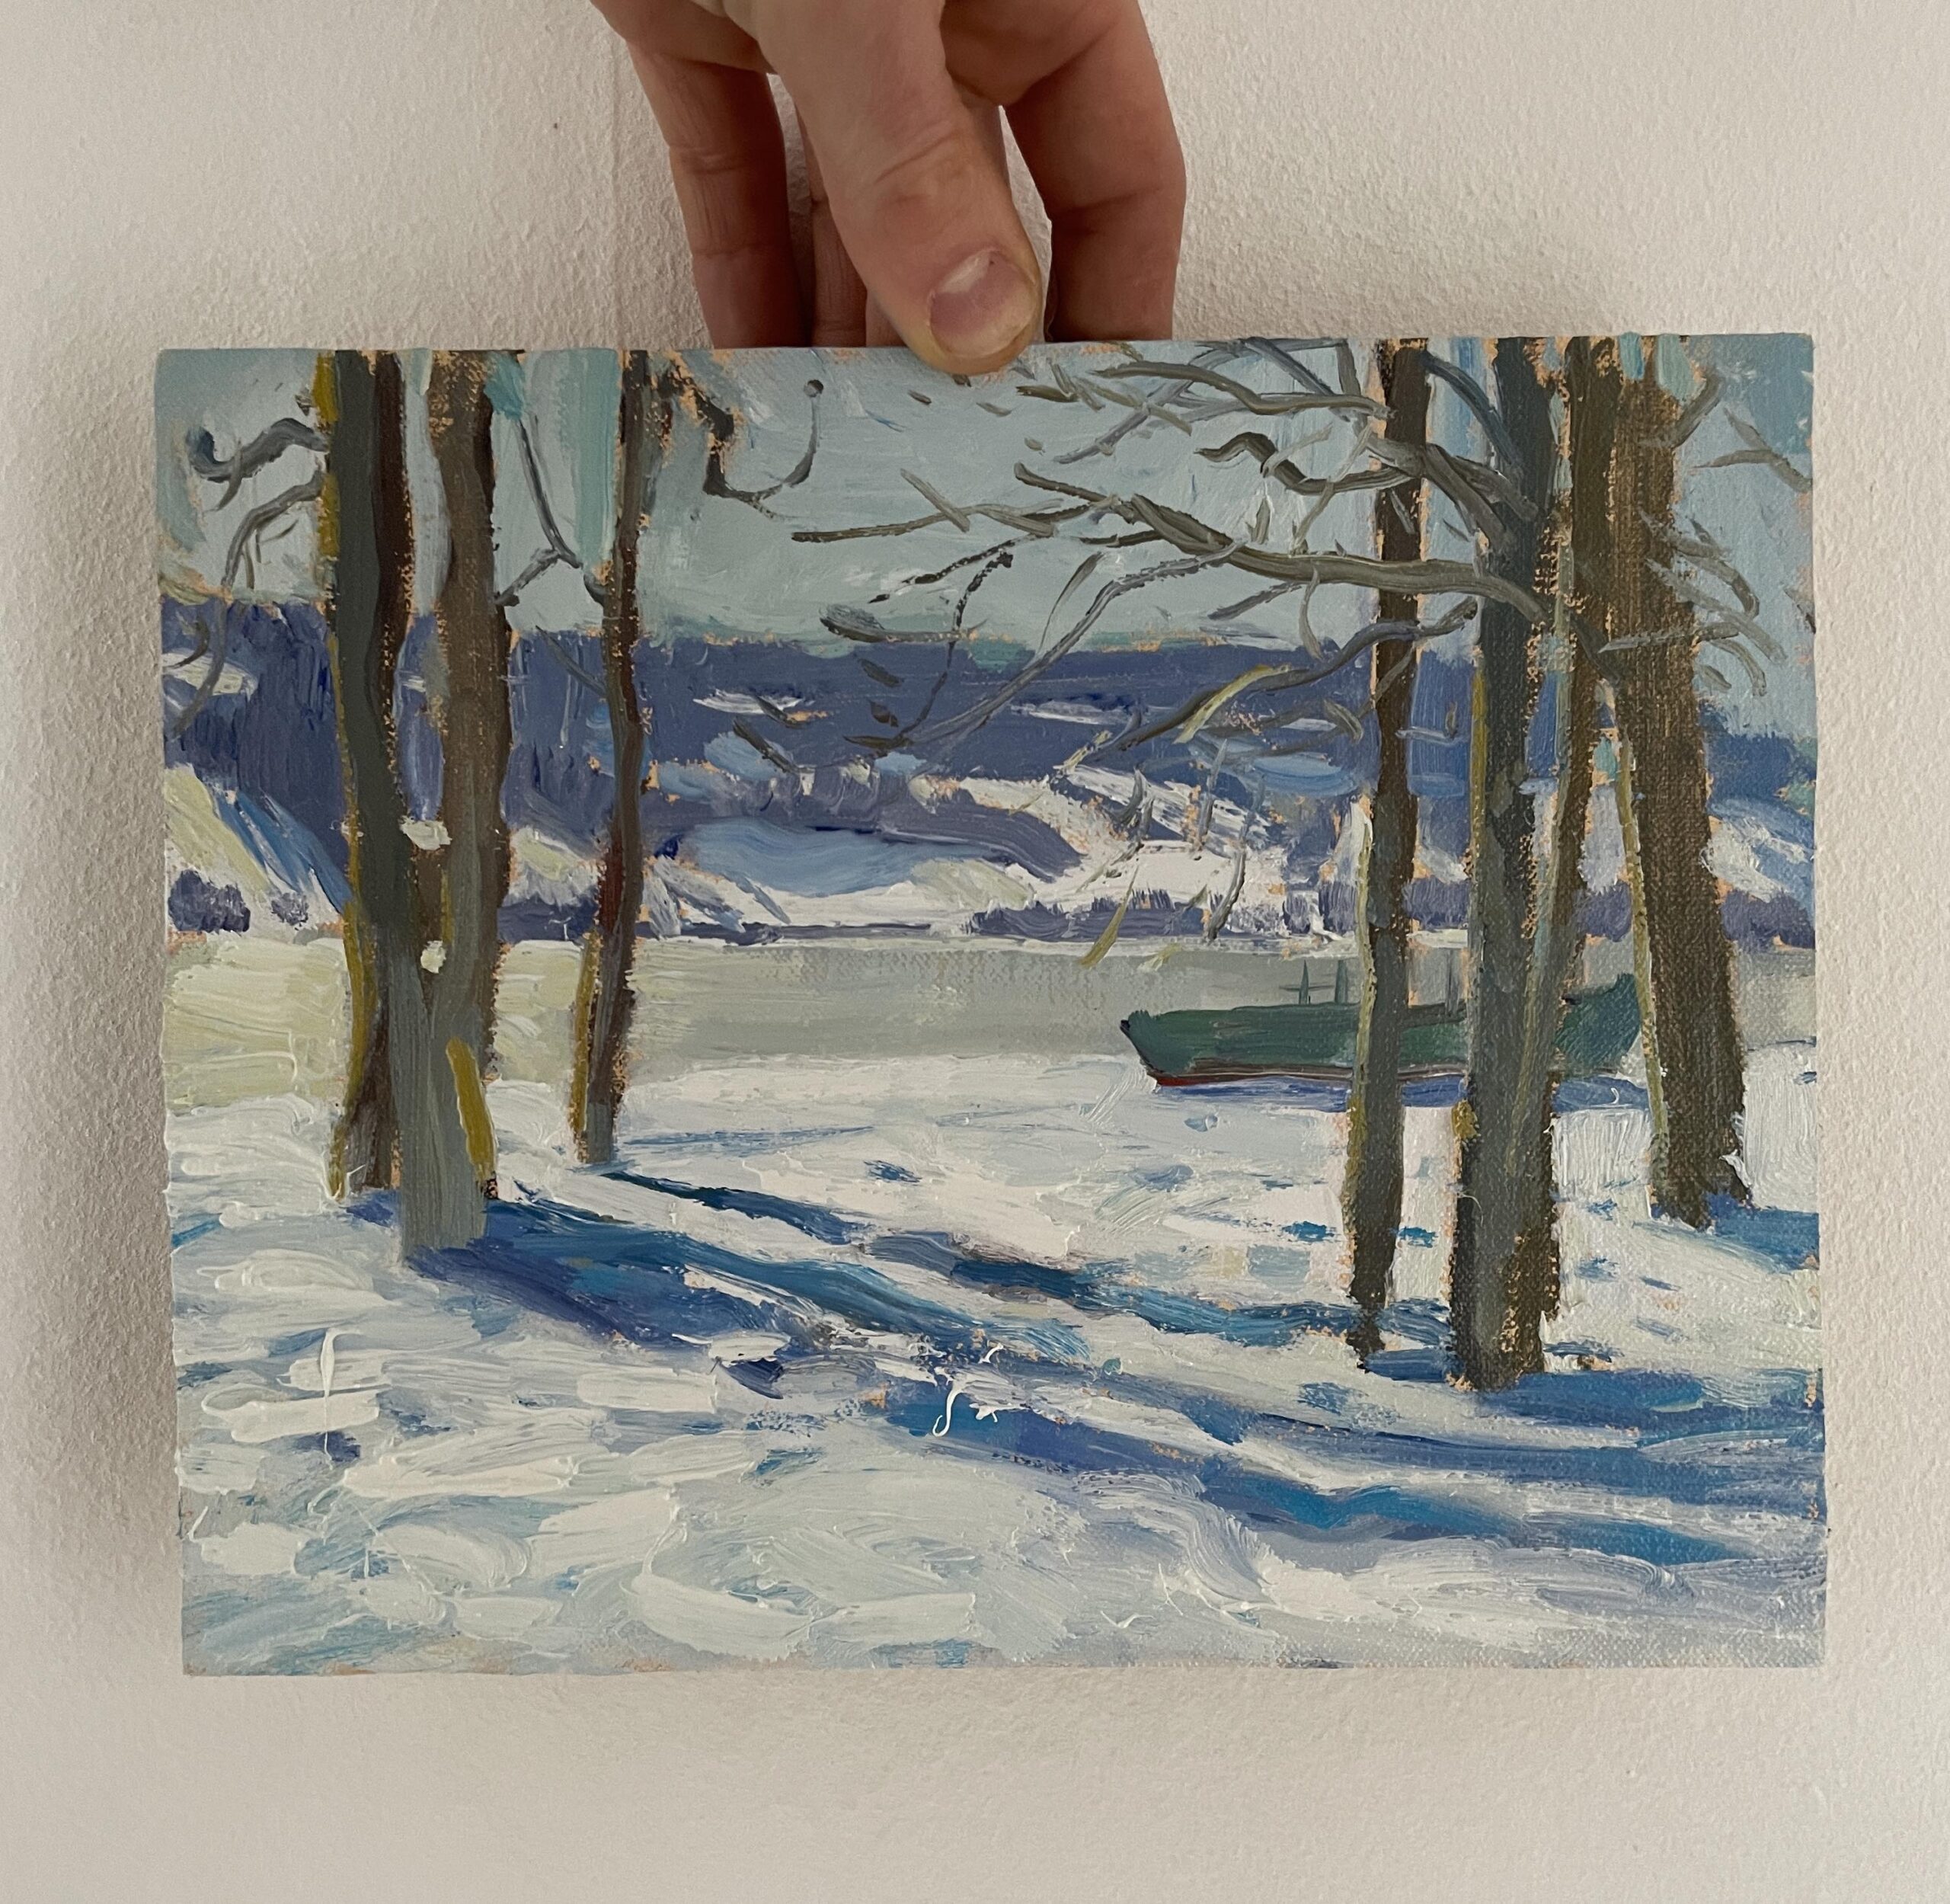 Oil painting of Lac de joux, frozen in winter